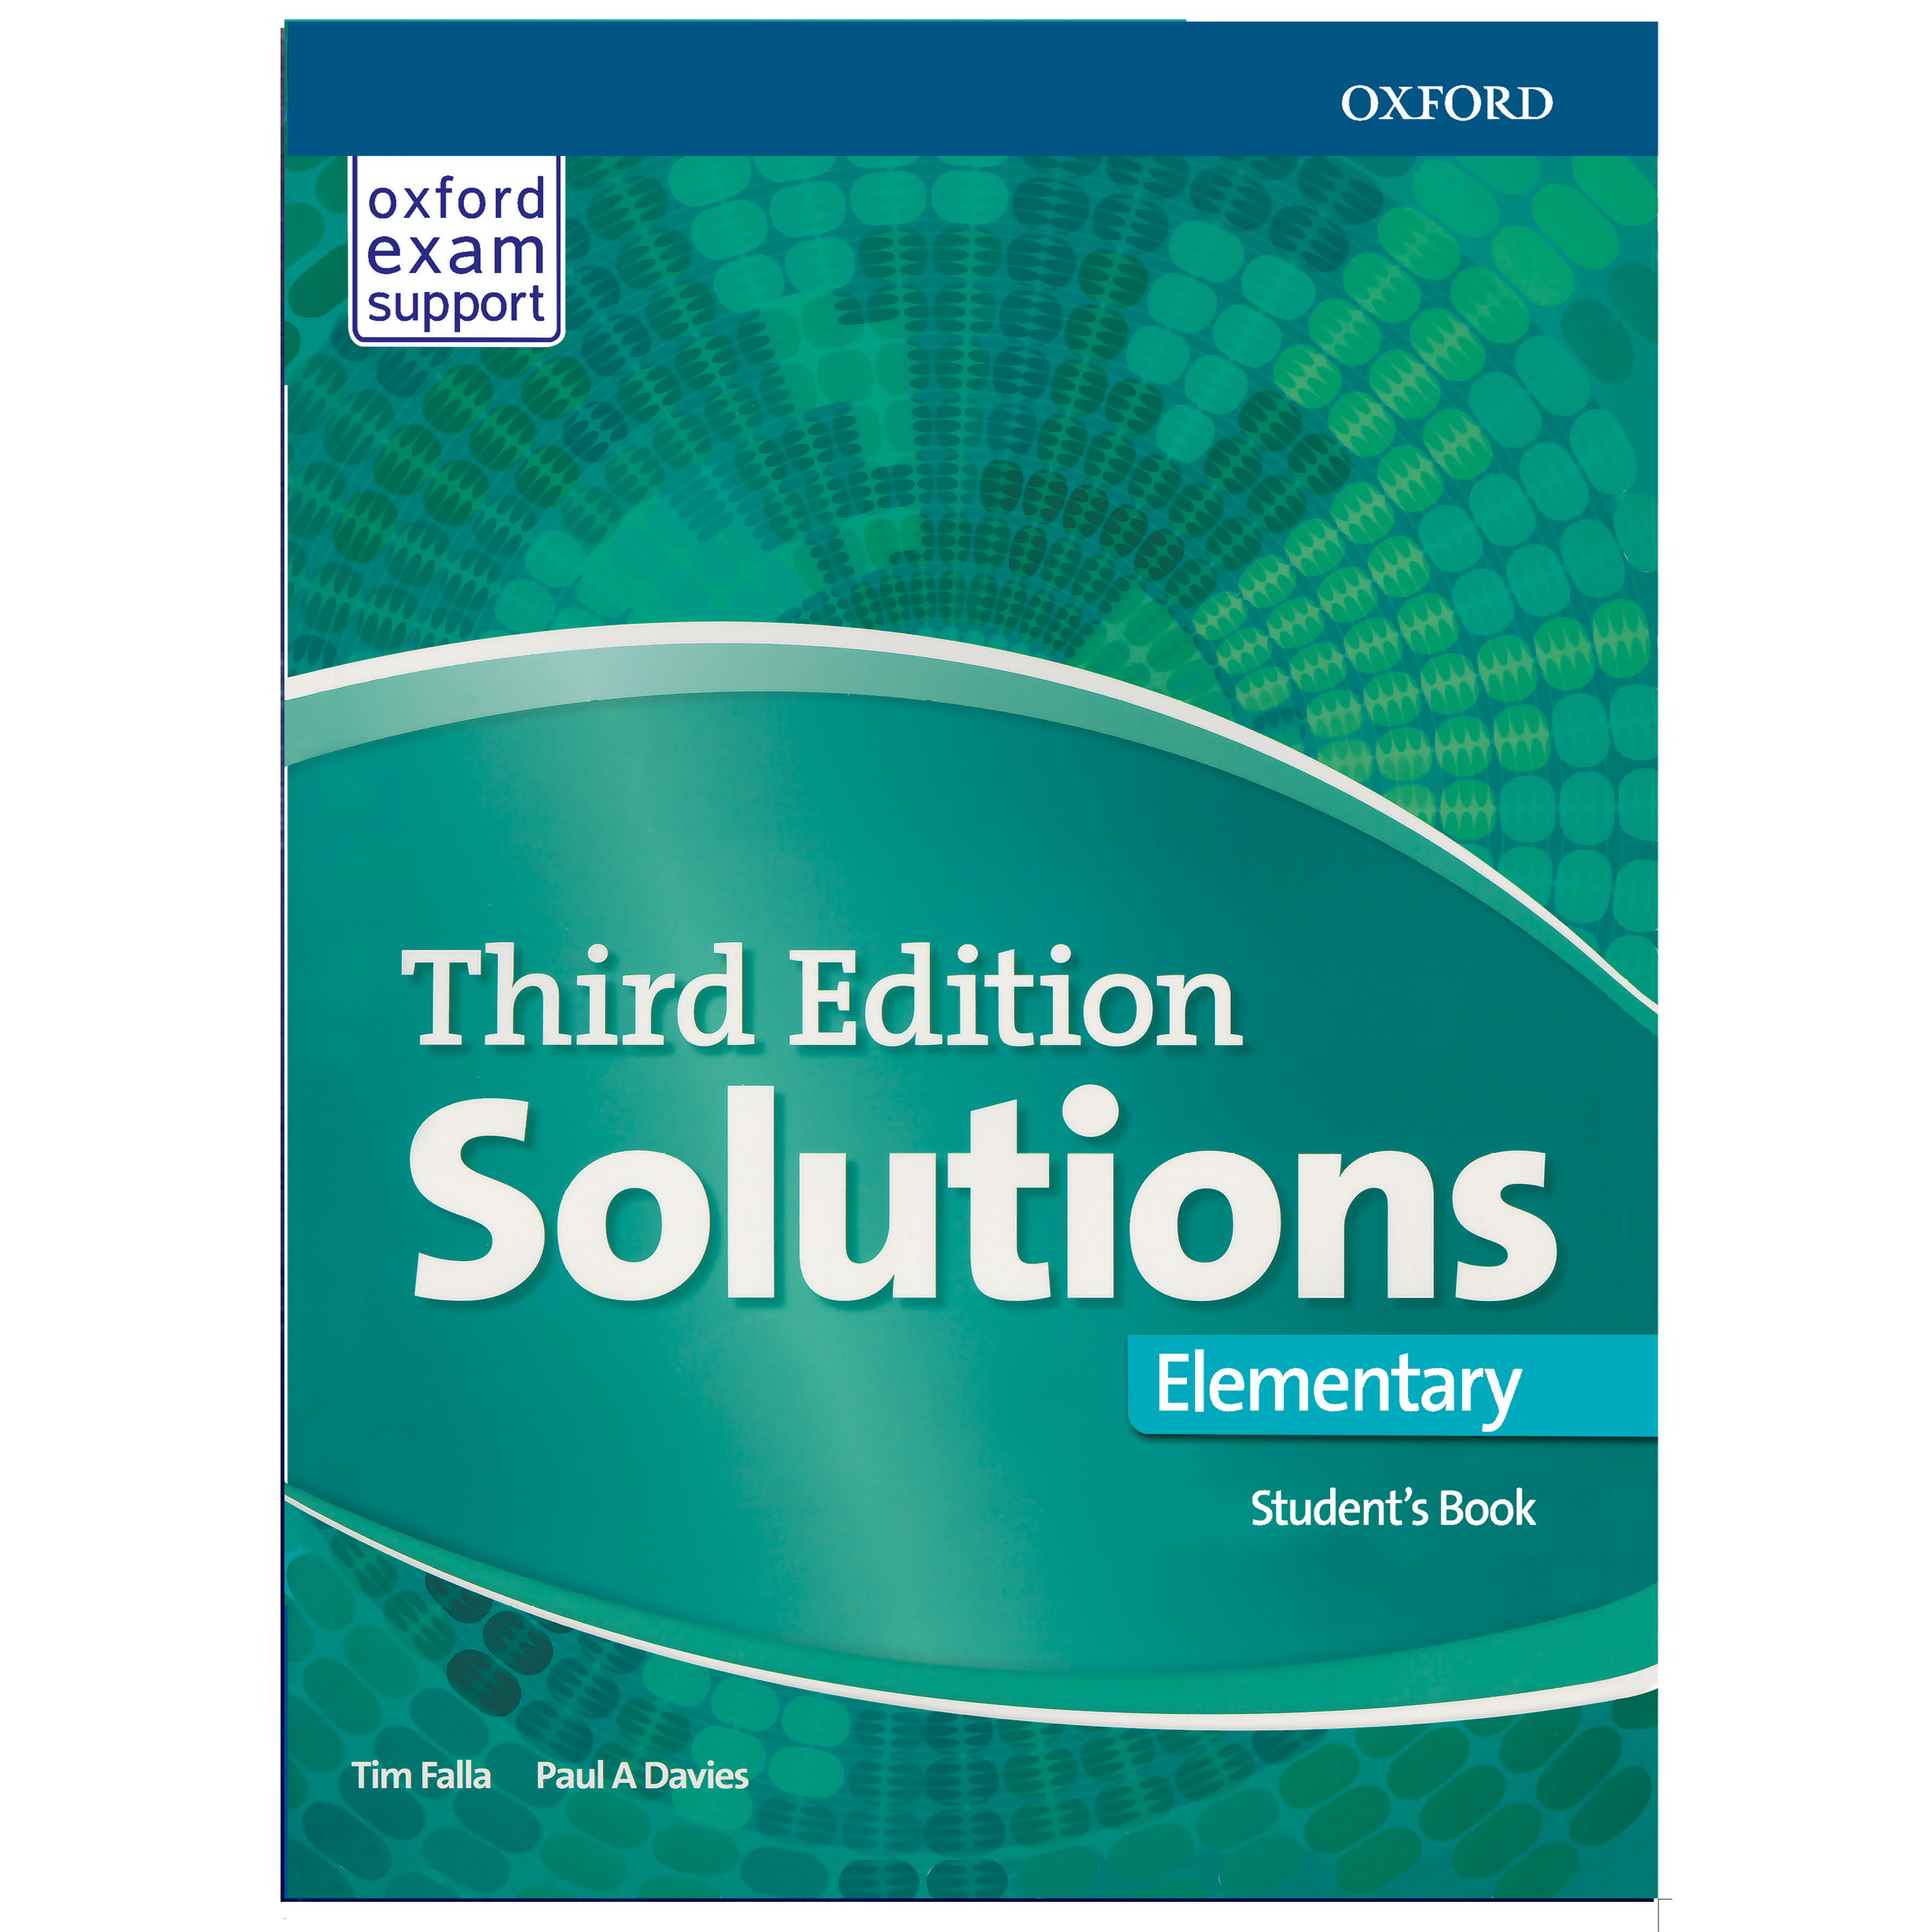 کتاب Solutions Elementary اثر Paul A.Davies and Tim Falla انتشارات هدف نوین